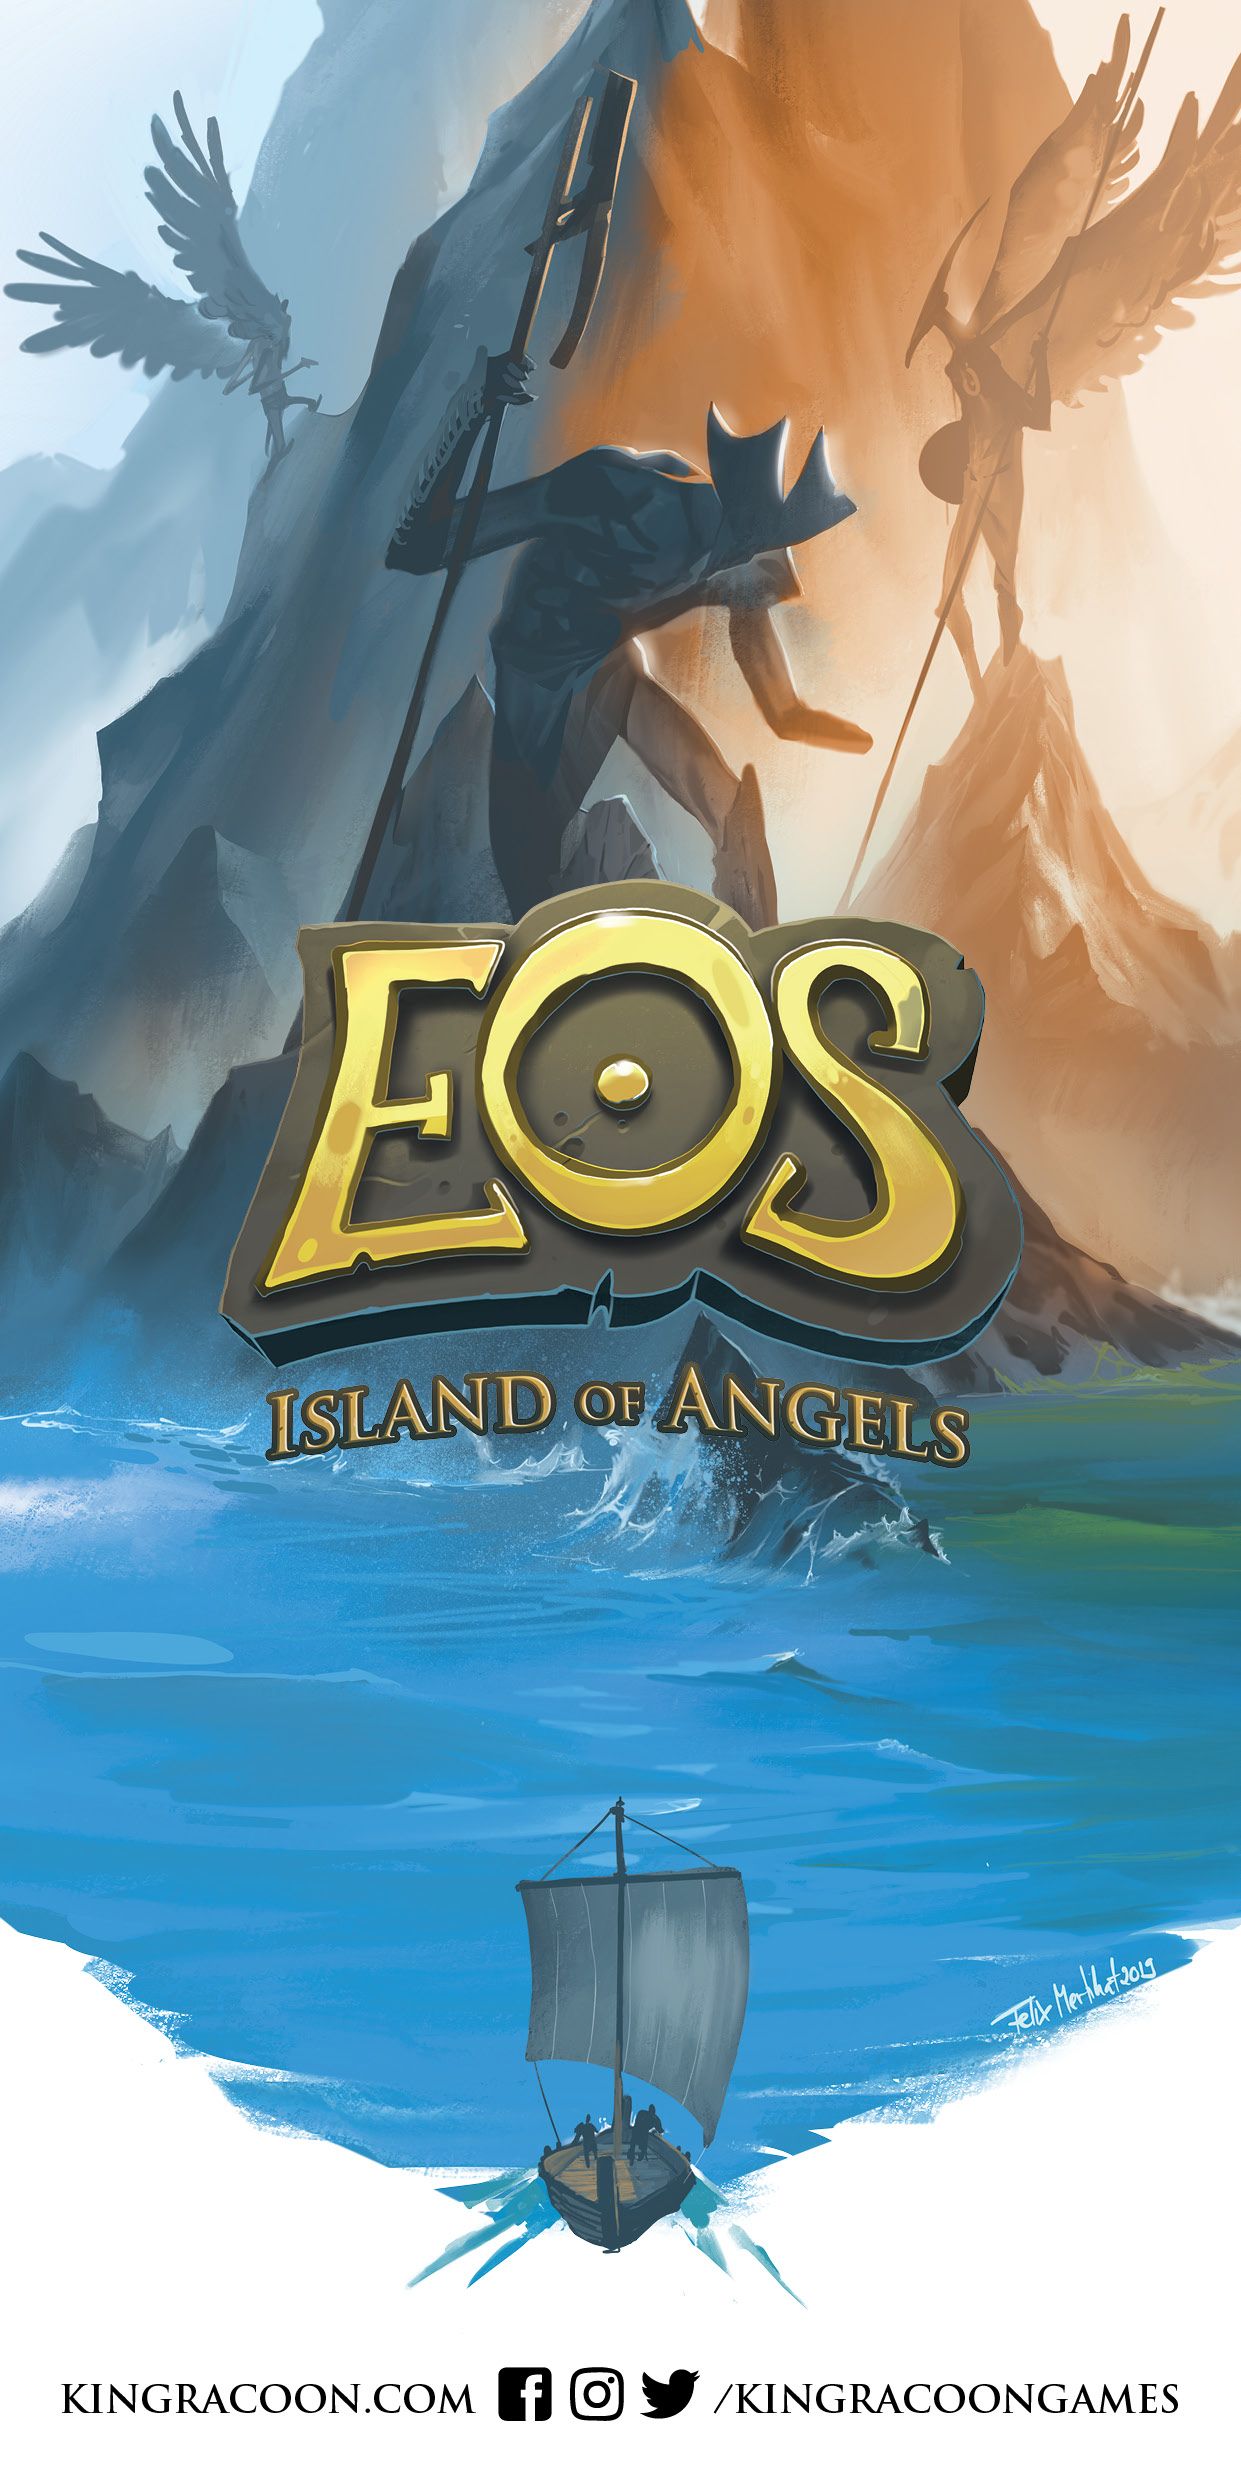 EOS: Island of Angels